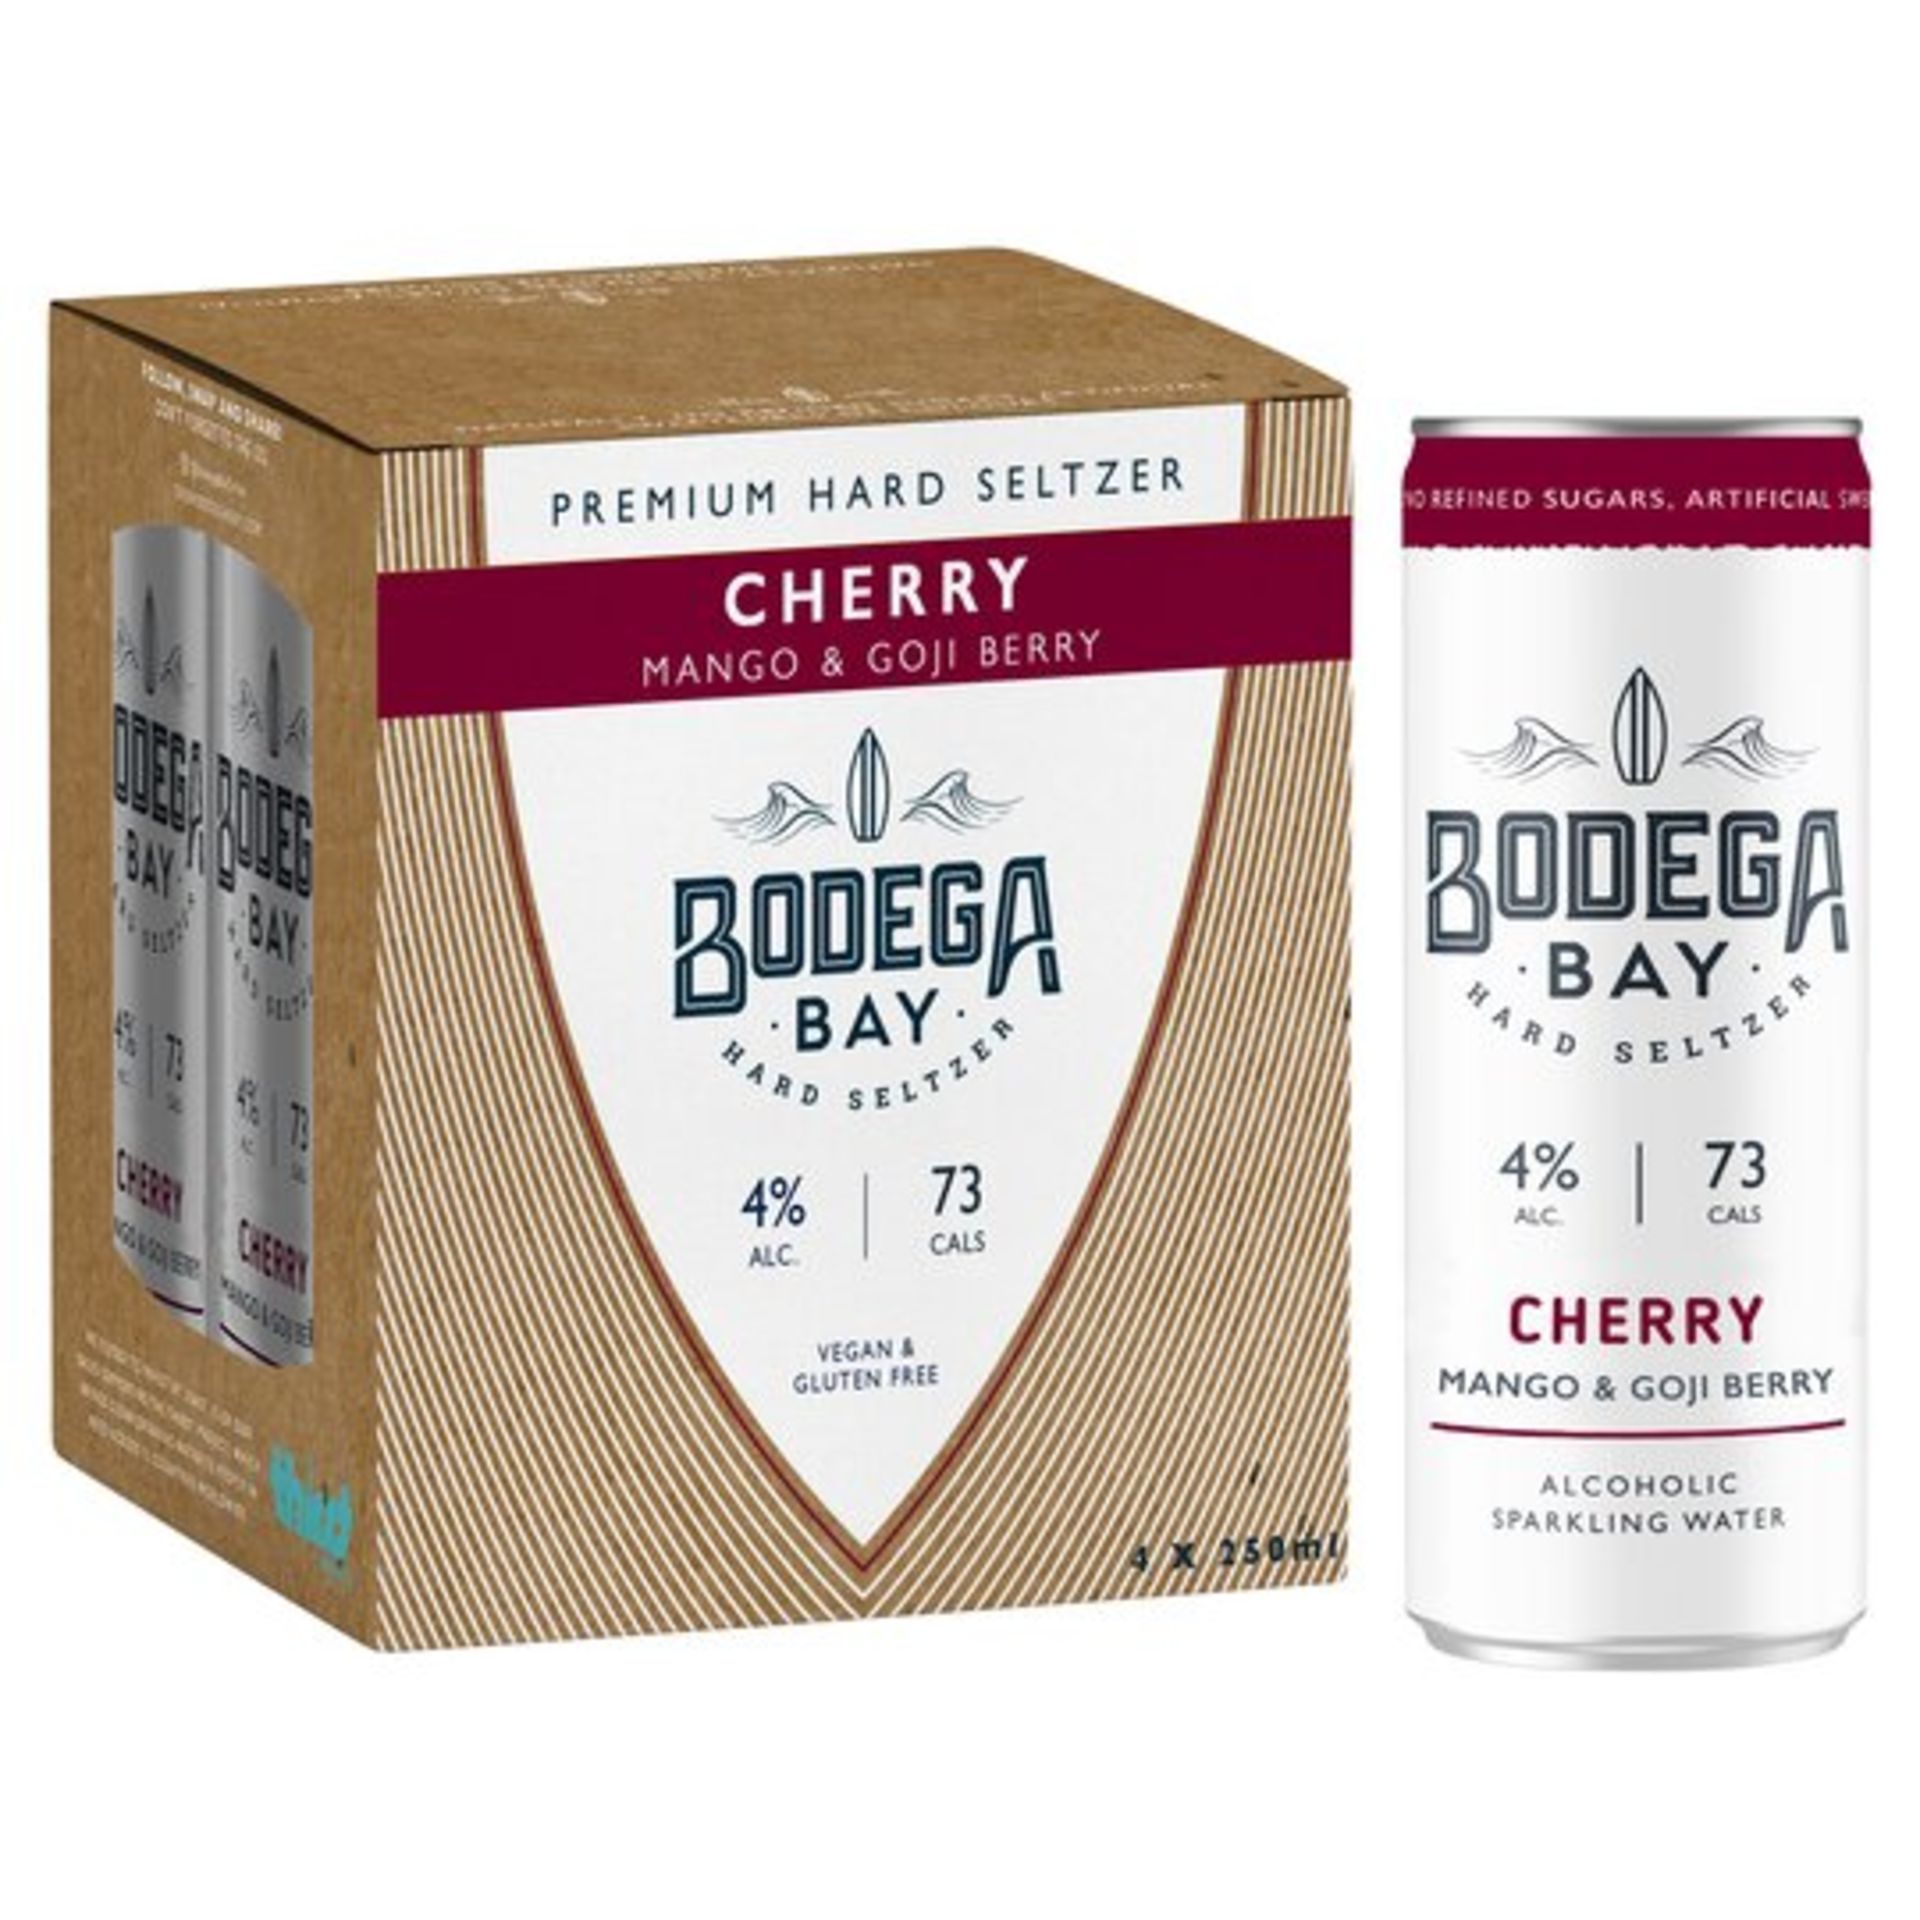 24 x Bodega Bay Hard Seltzer 250ml Alcoholic Sparkling Water Drinks - Cherry Mango & Goji Berry - Image 4 of 4